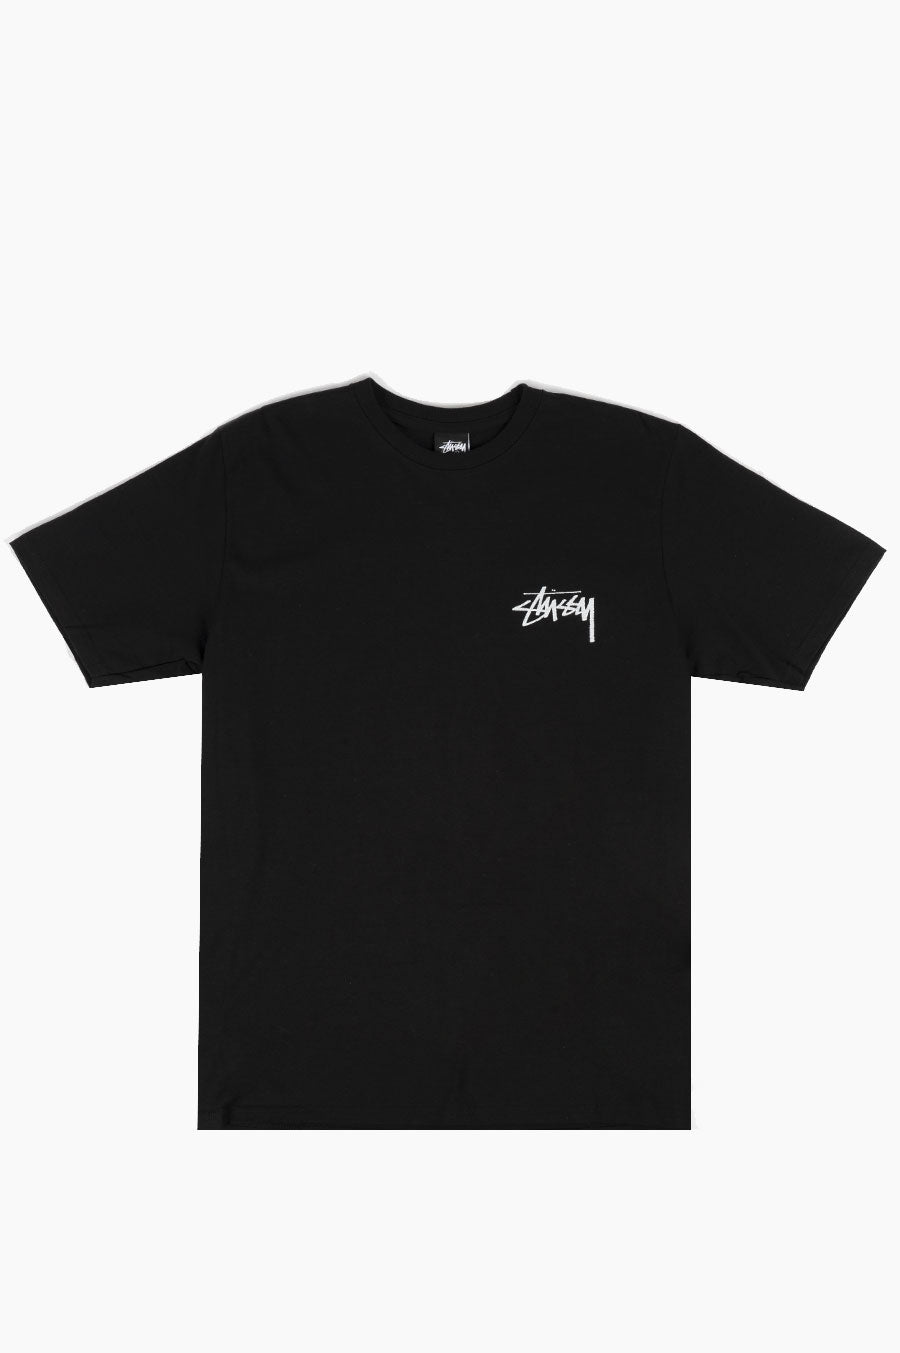 Stussy T-shirt In Black Cotton for Men